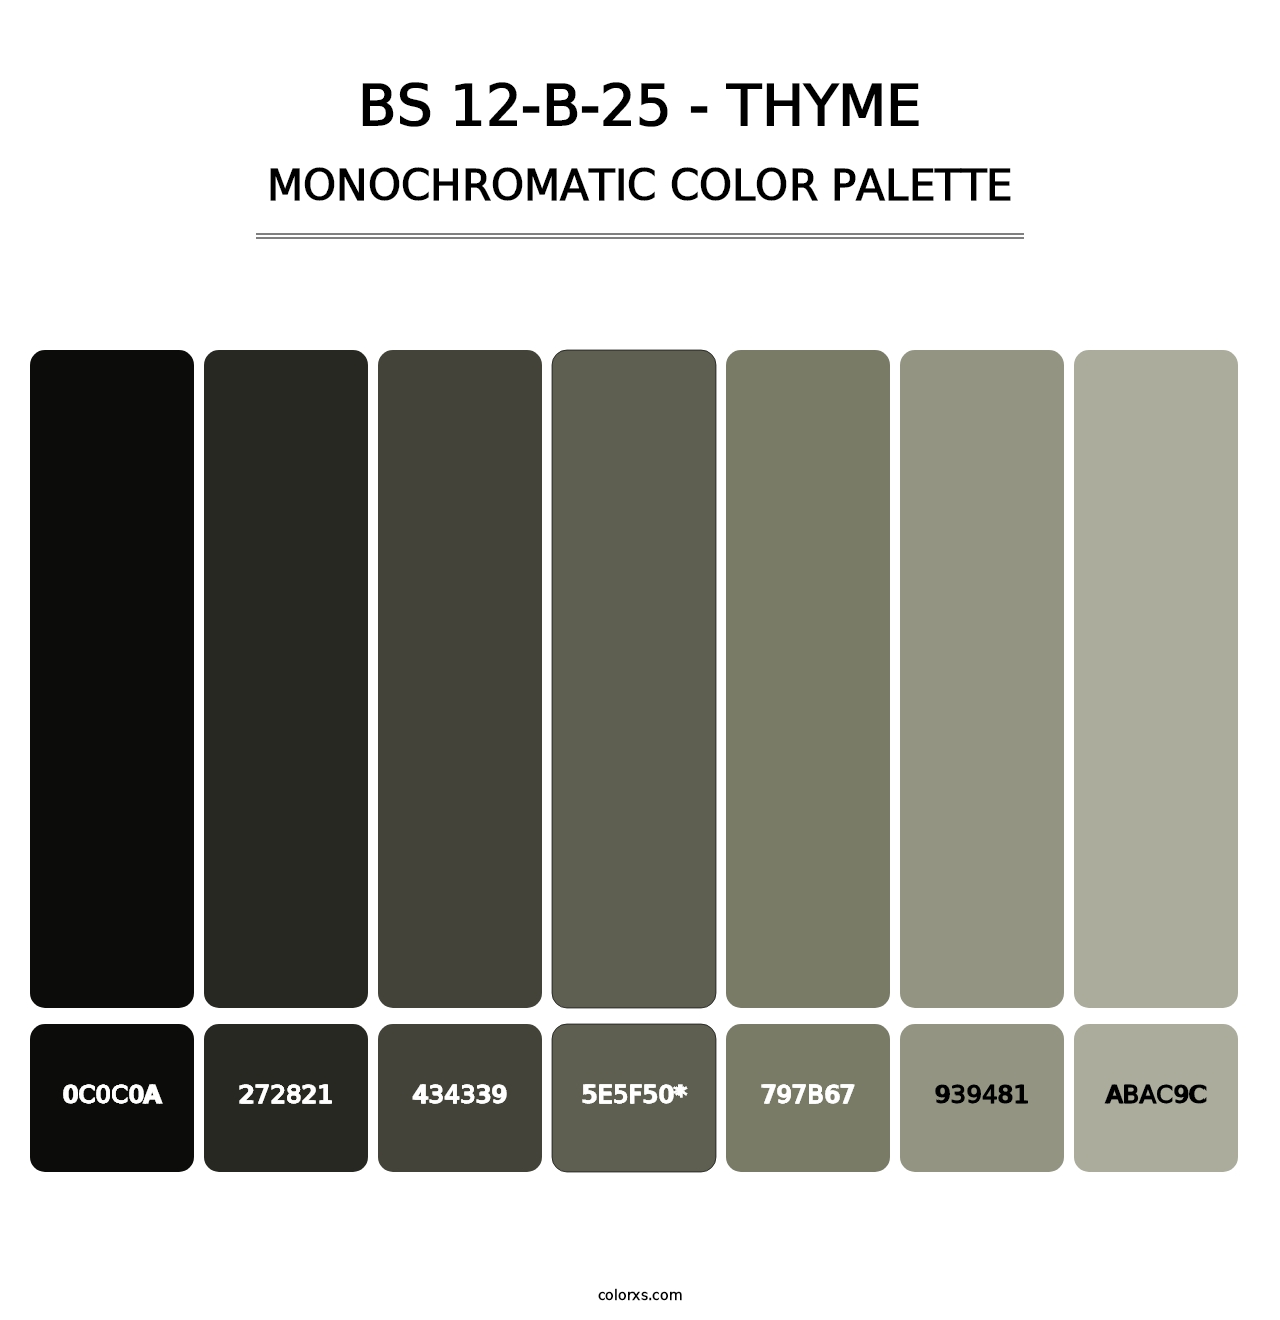 BS 12-B-25 - Thyme - Monochromatic Color Palette